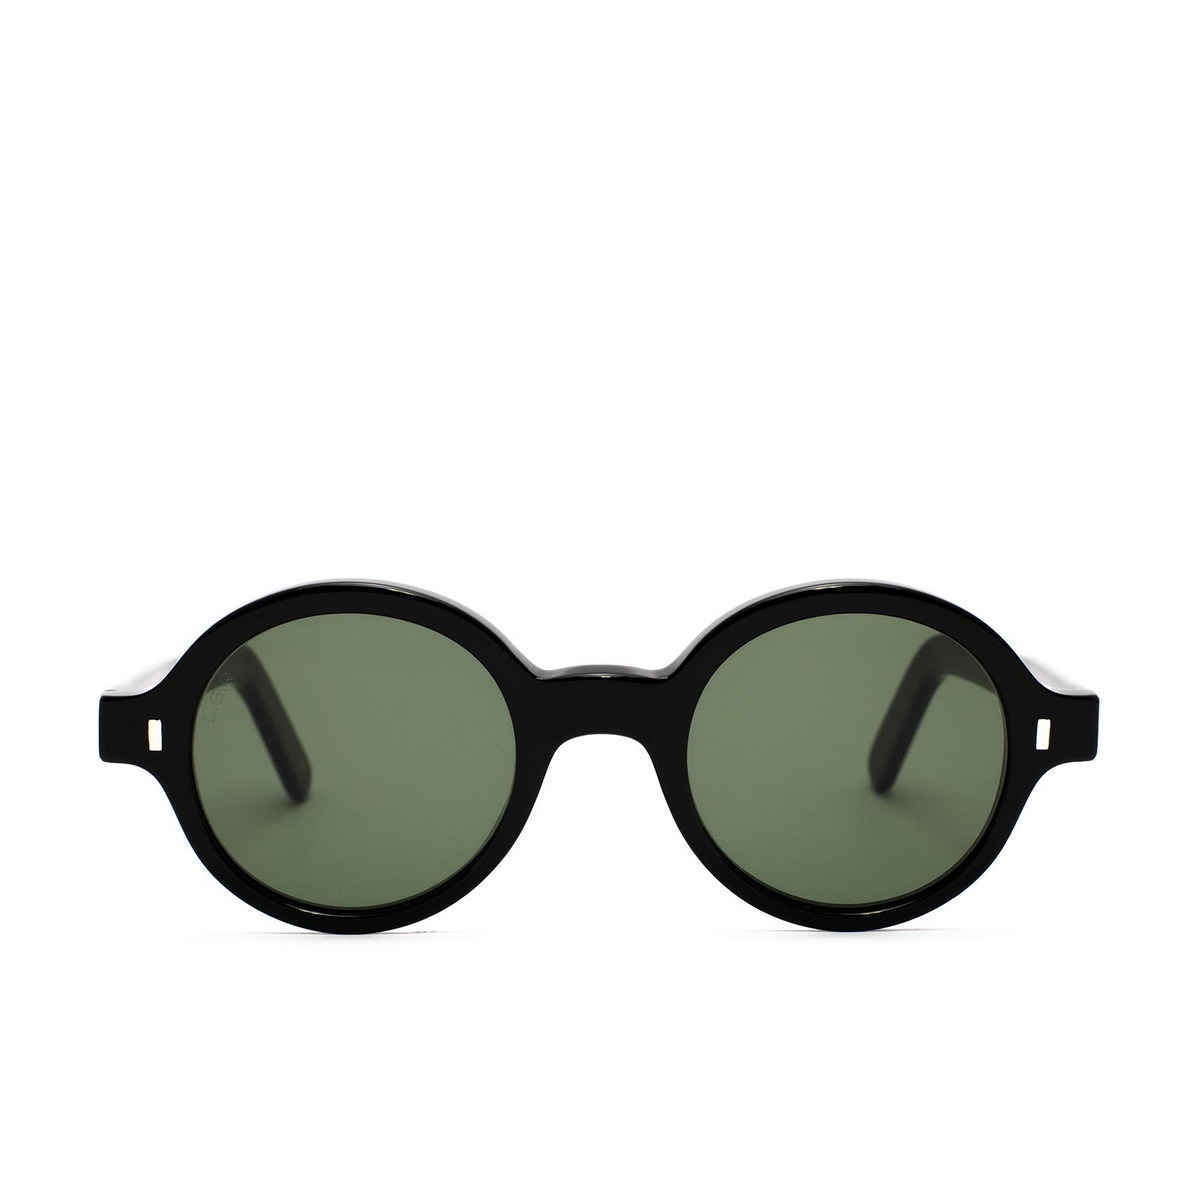 L.G.R® Round Sunglasses: Reunion Bold color Black 01 - front view.